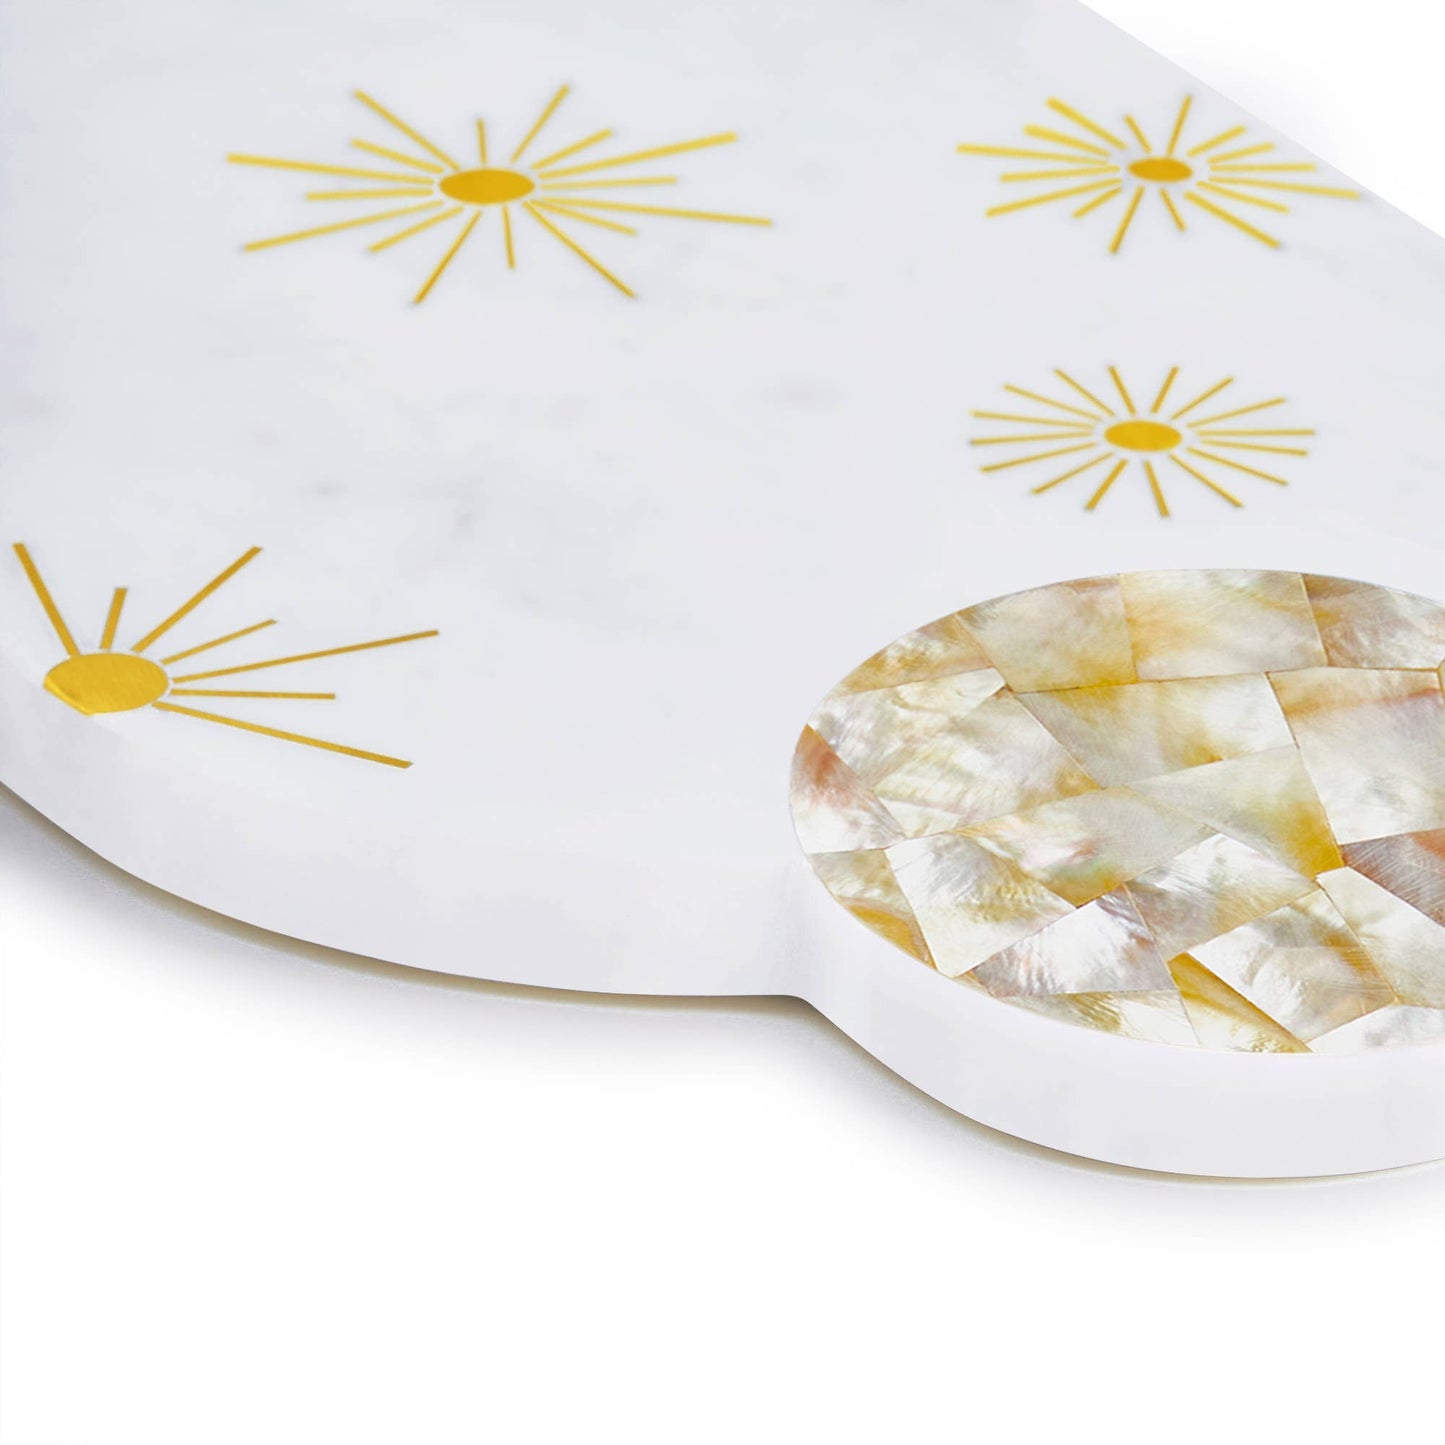 GAURI KOHLI - Montenegro Marble Cheese Board